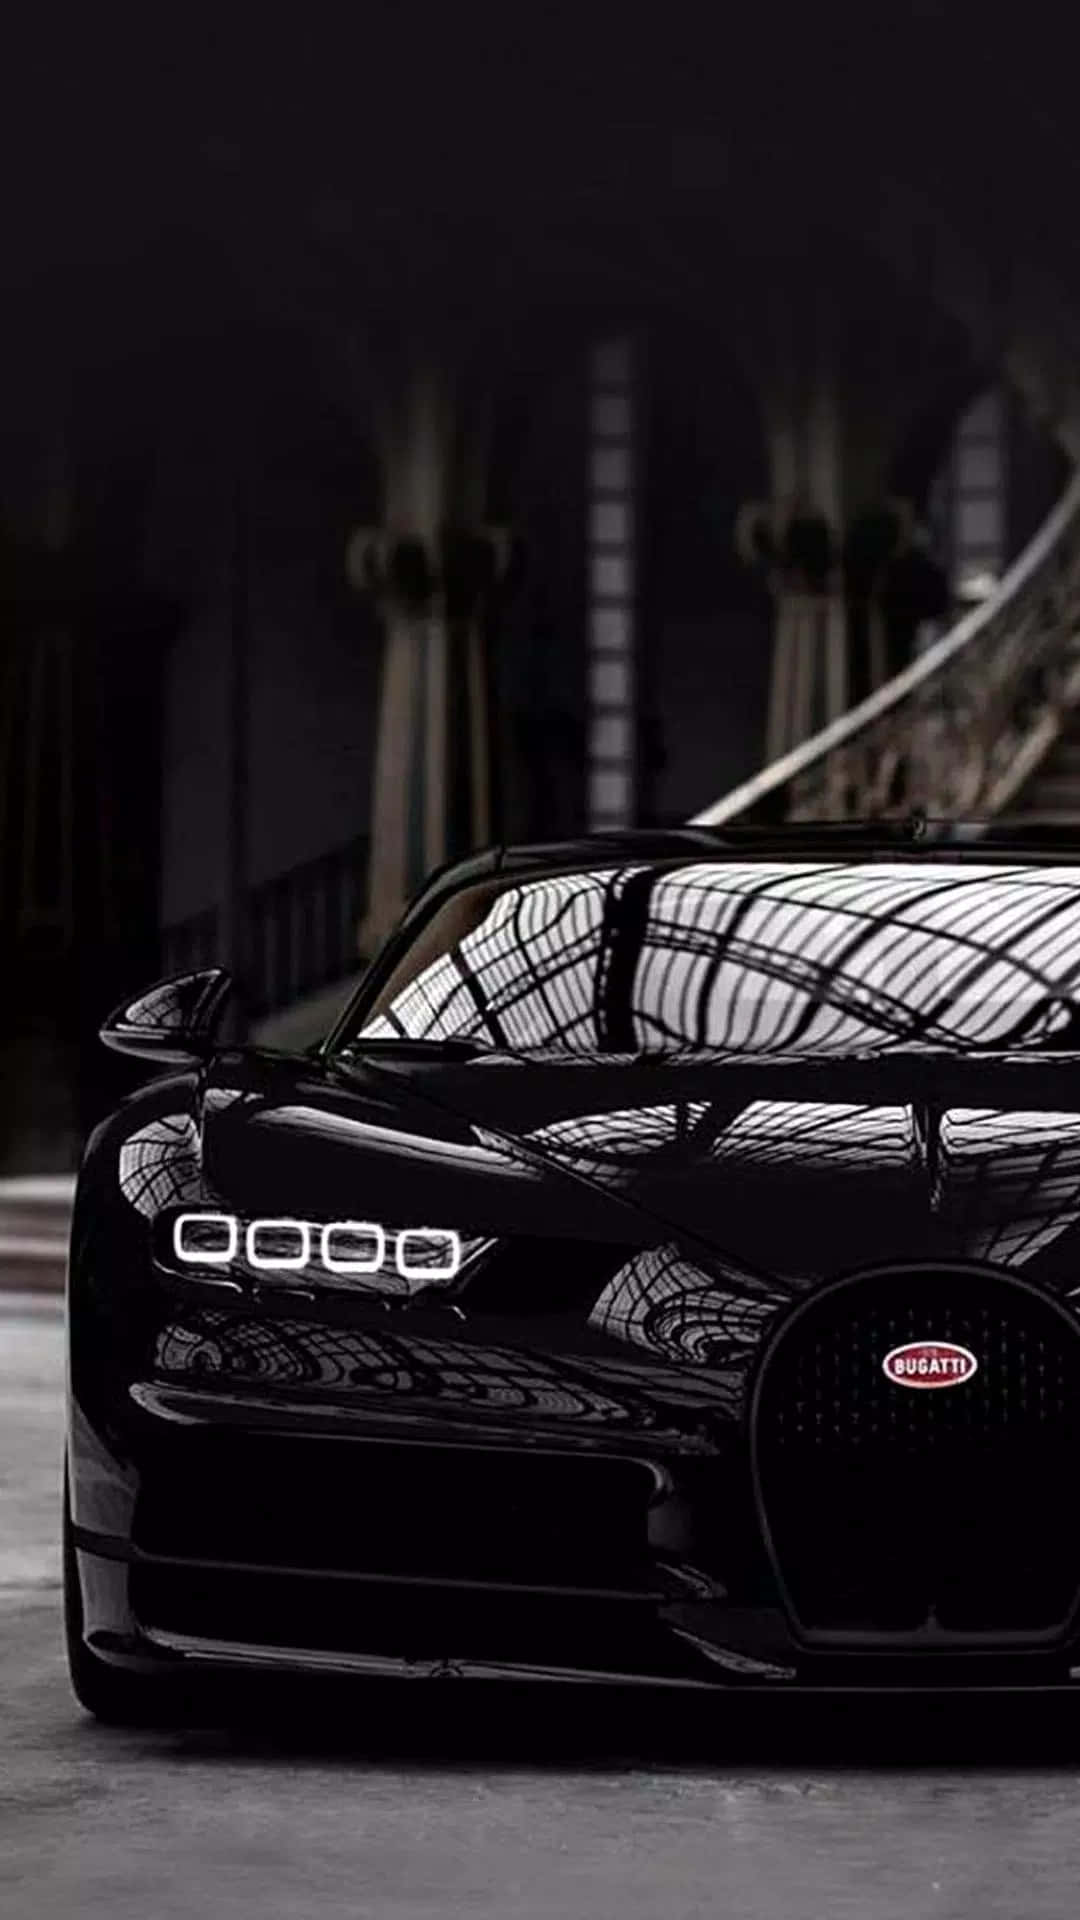 Exotic Black Car [wallpaper] Background